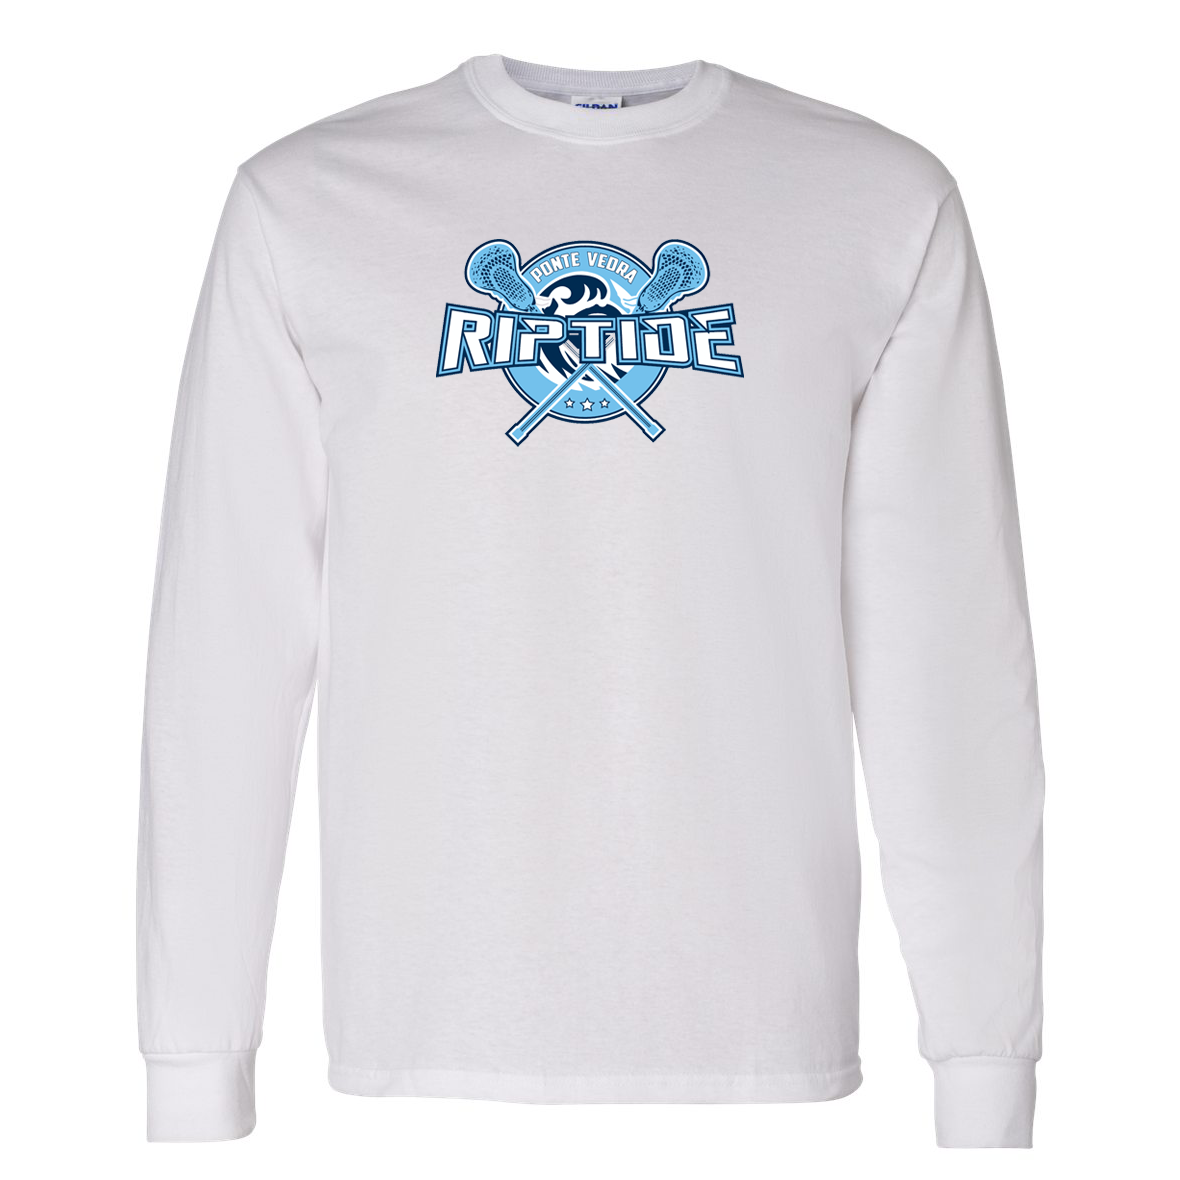 Ponte Vedra Riptide Lacrosse Gildan Ultra Cotton Long Sleeve Shirt